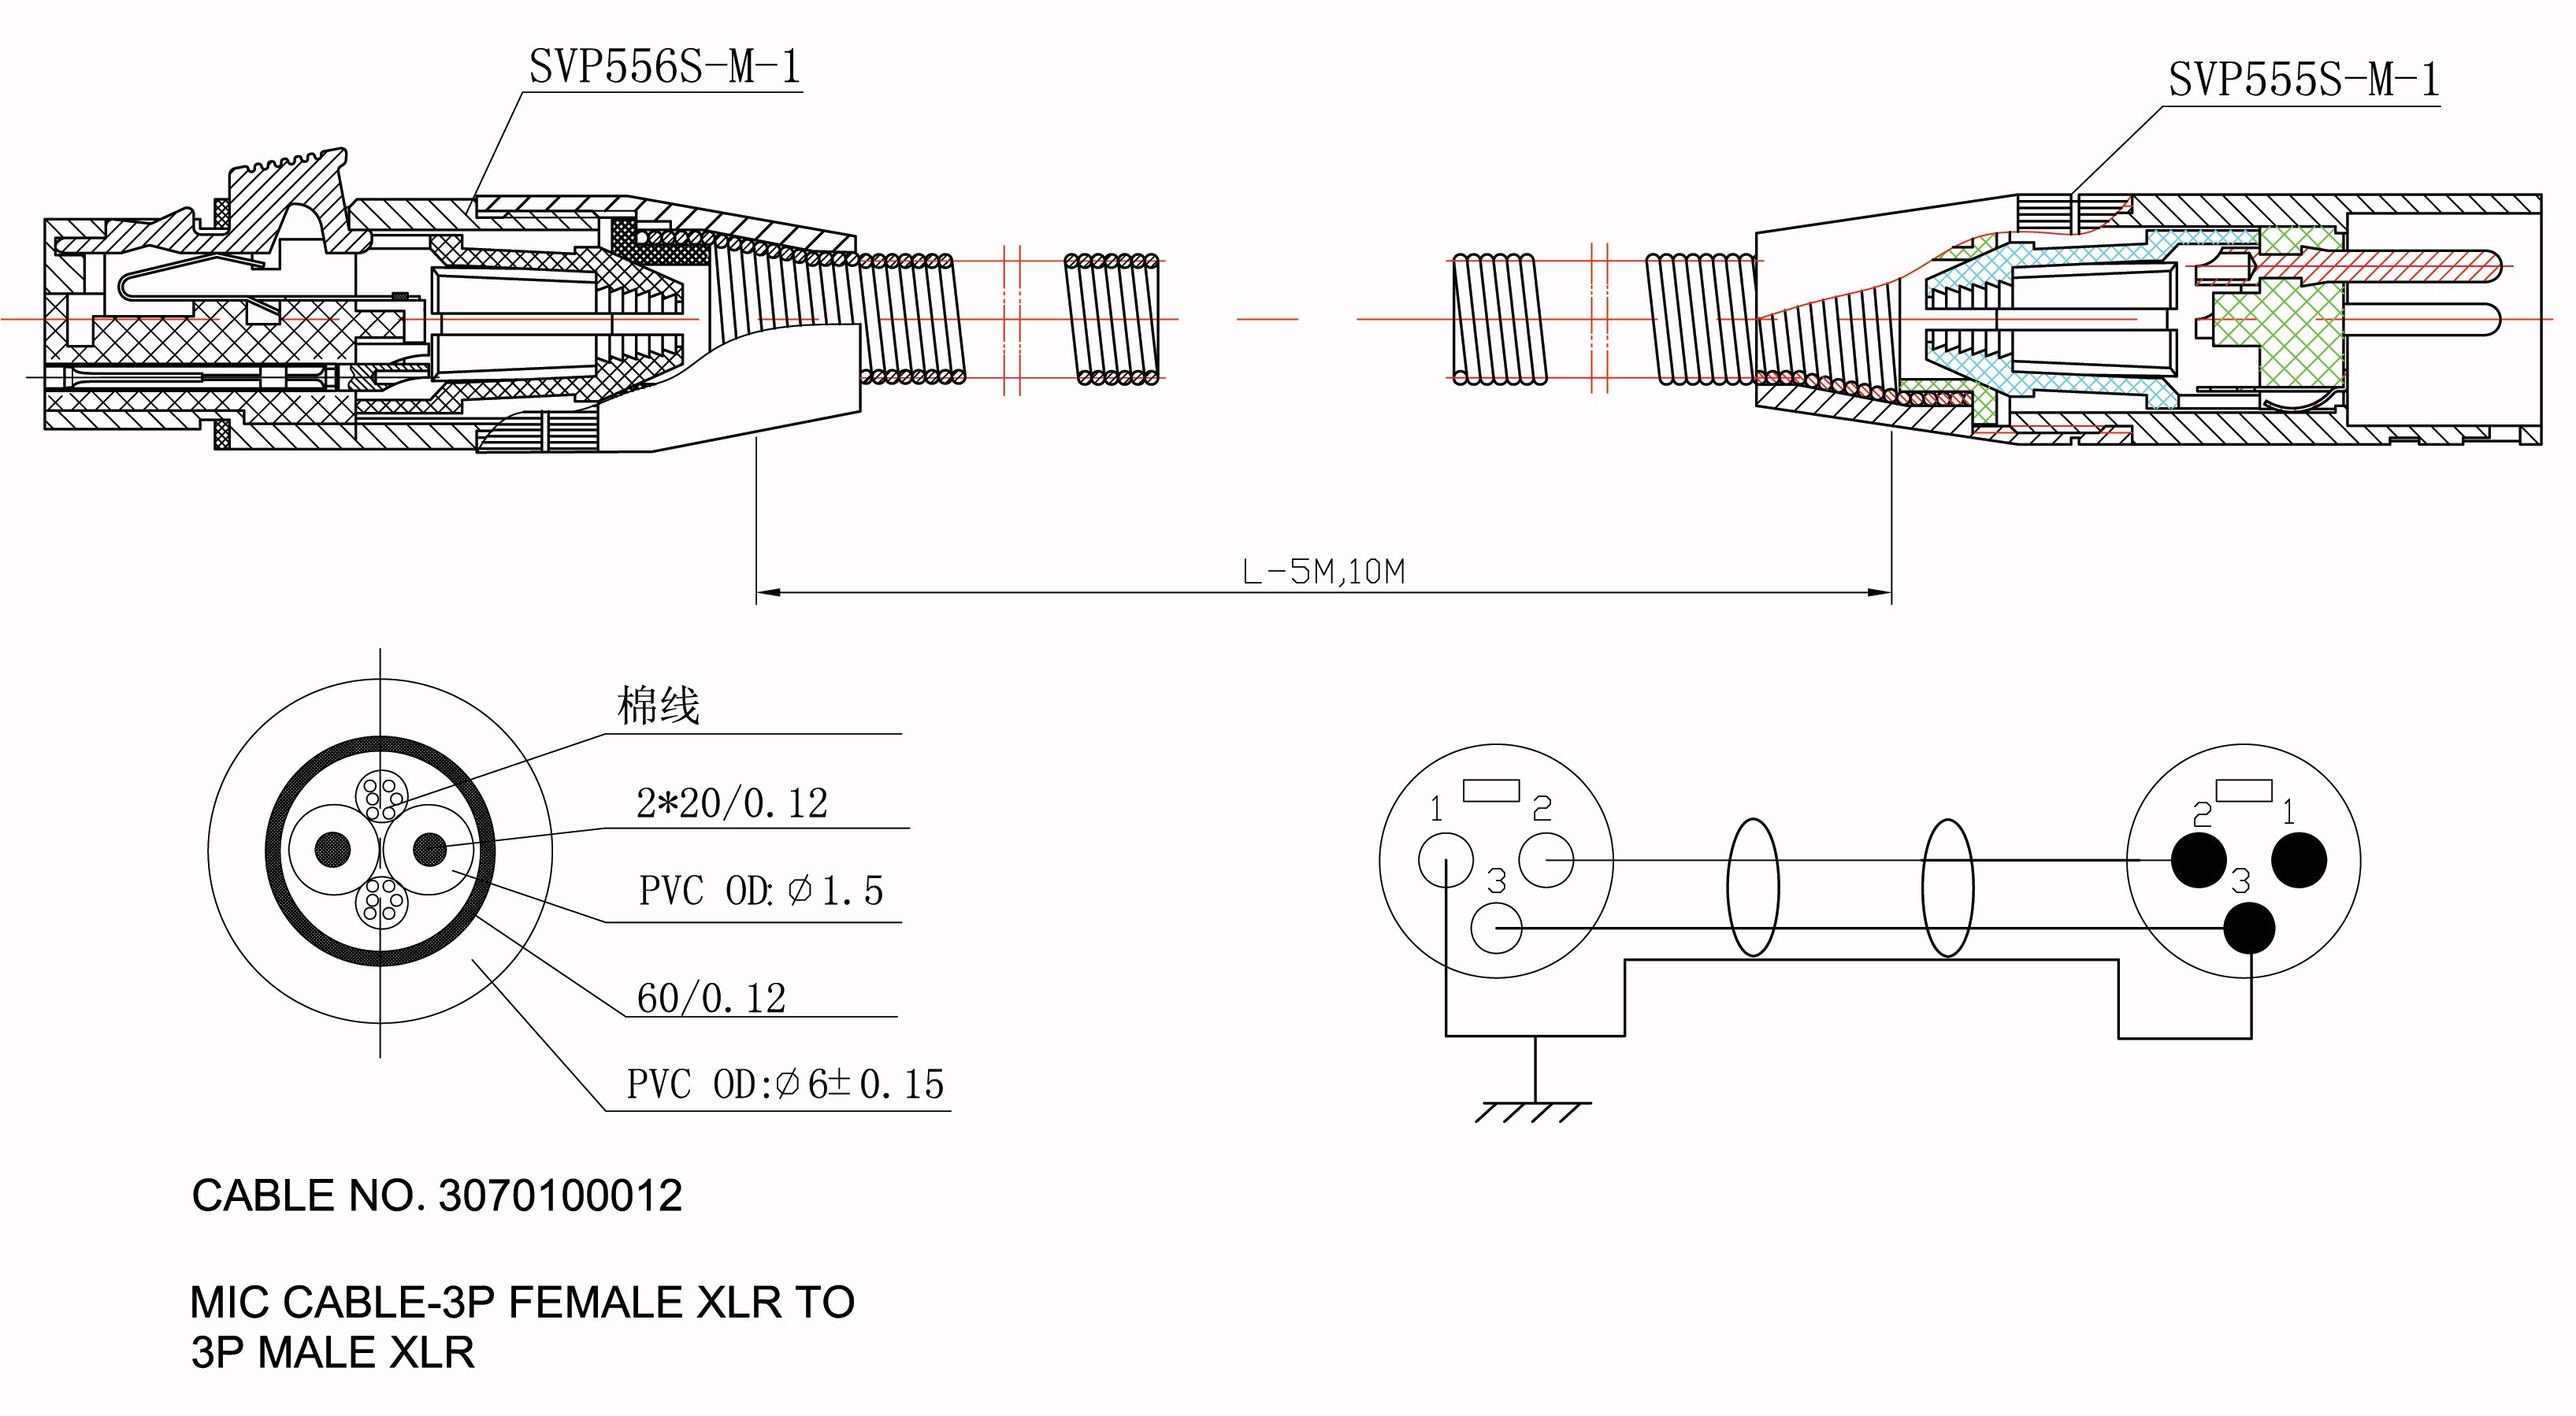 dsc 551 wiring diagram wiring diagram directed alarm wiring diagram elegant wiring diagram car alarm mix